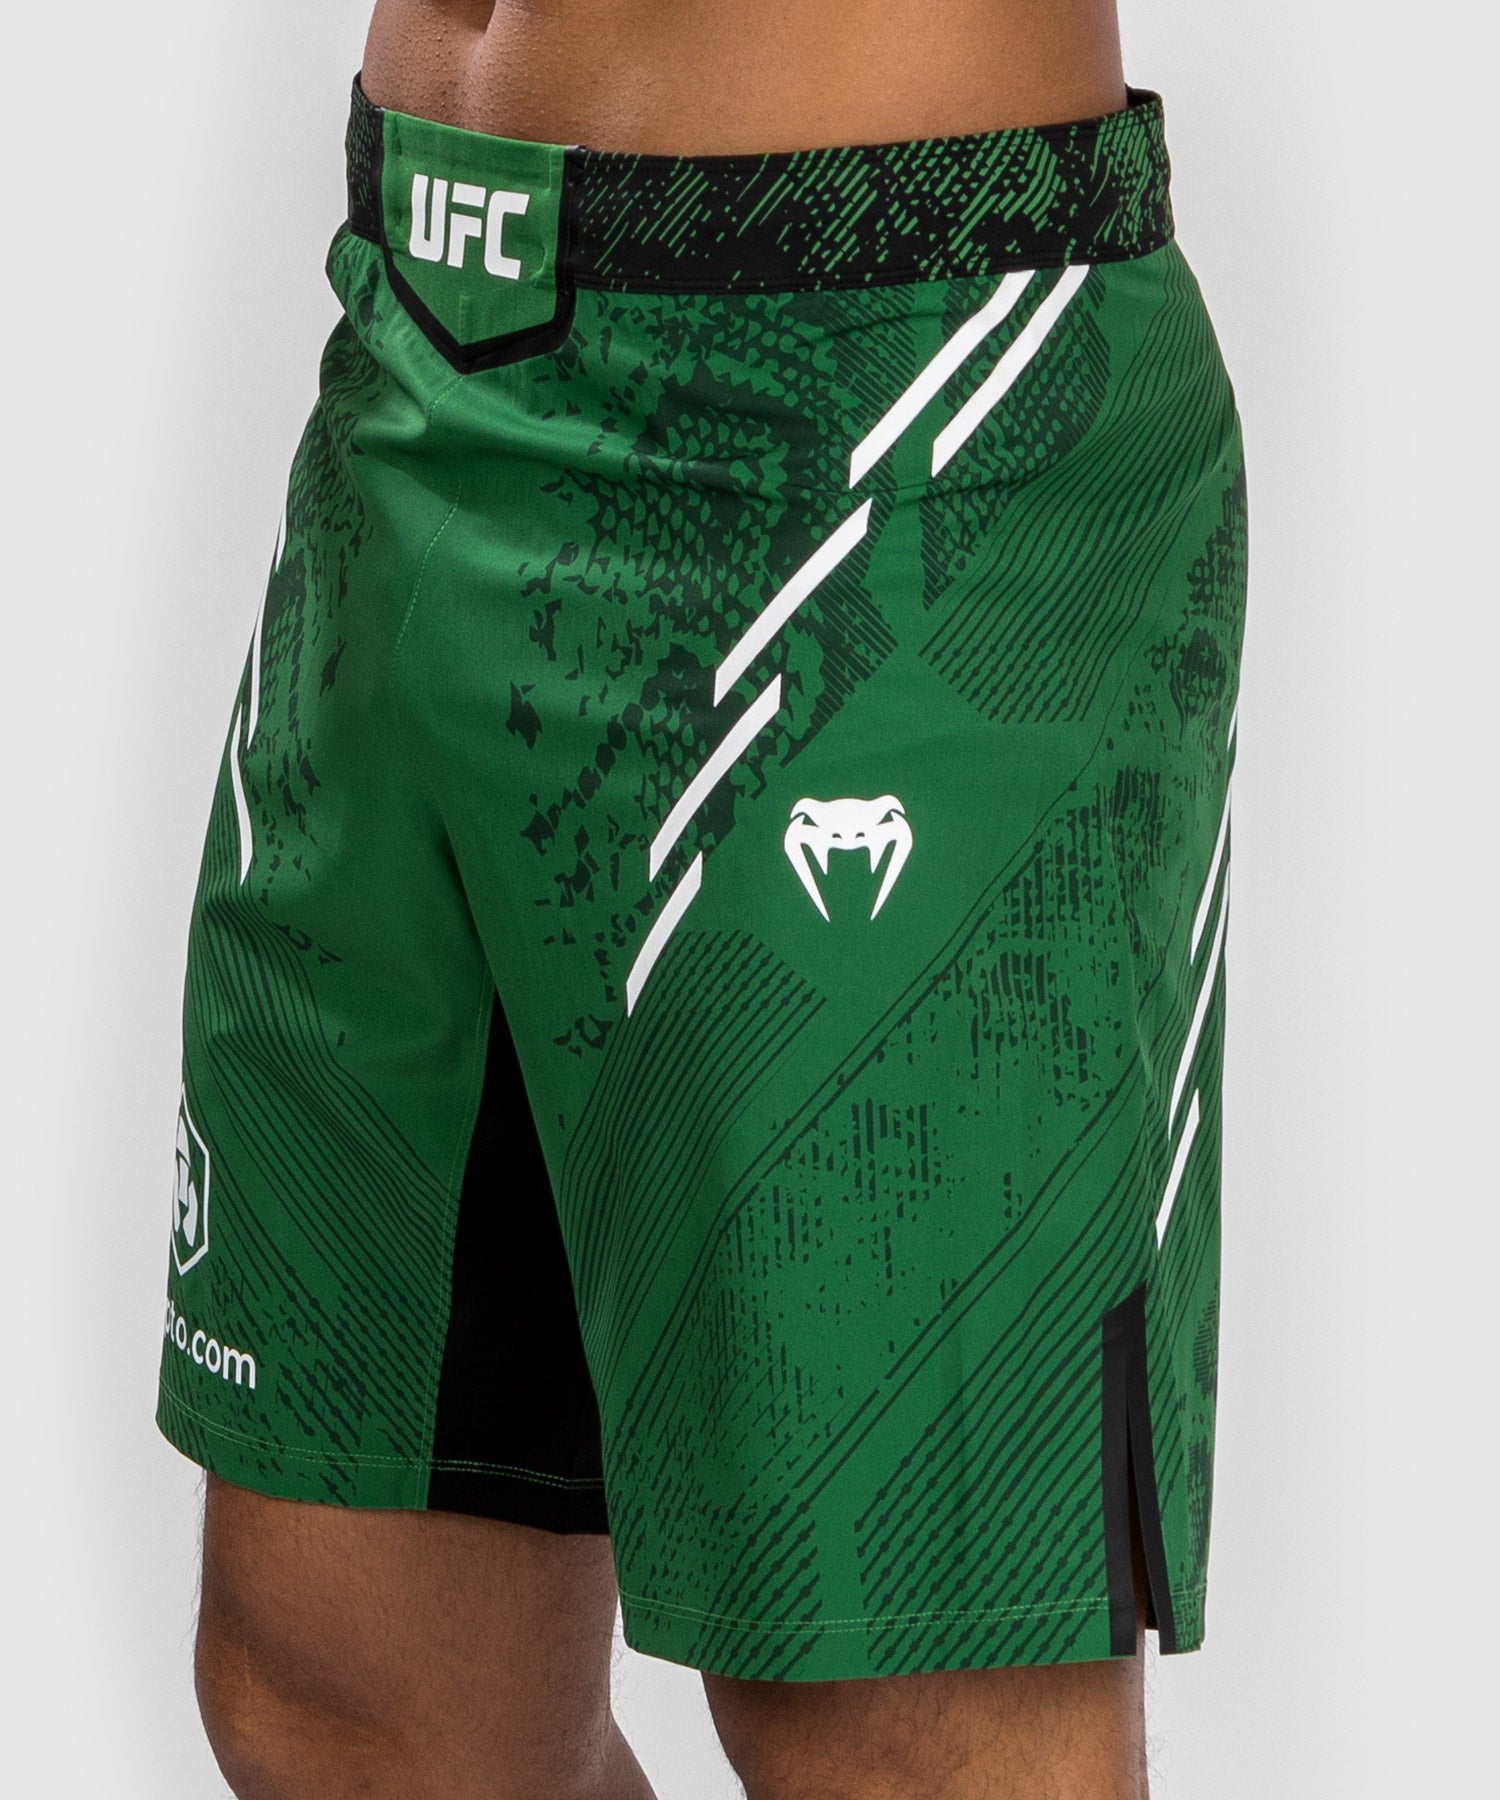 UFC x Venum Pro Line Men's Fight Shorts Green - FIGHTWEAR SHOP EUROPE